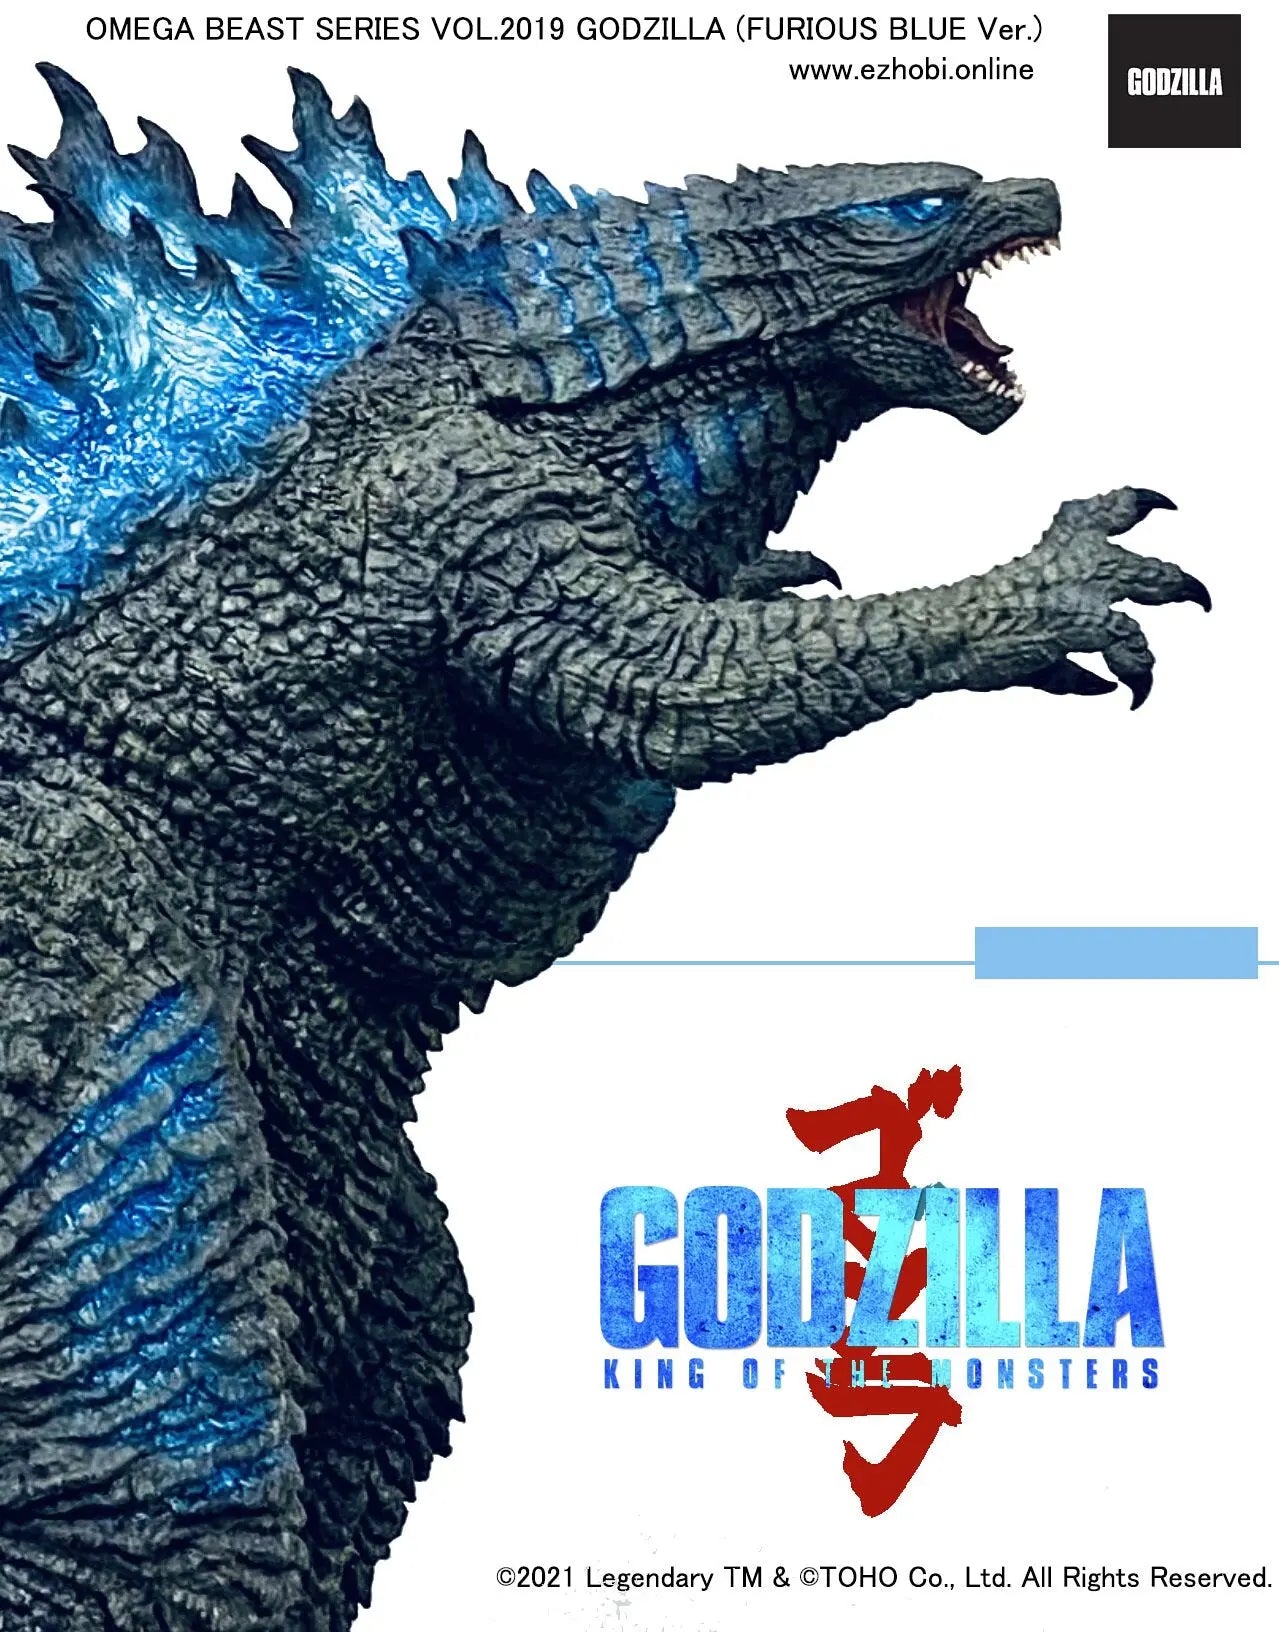 EZHOBI Godzilla: King of the Monsters Omega Beast Series Godzilla (Furious Blue Version) Limited Edition Statue